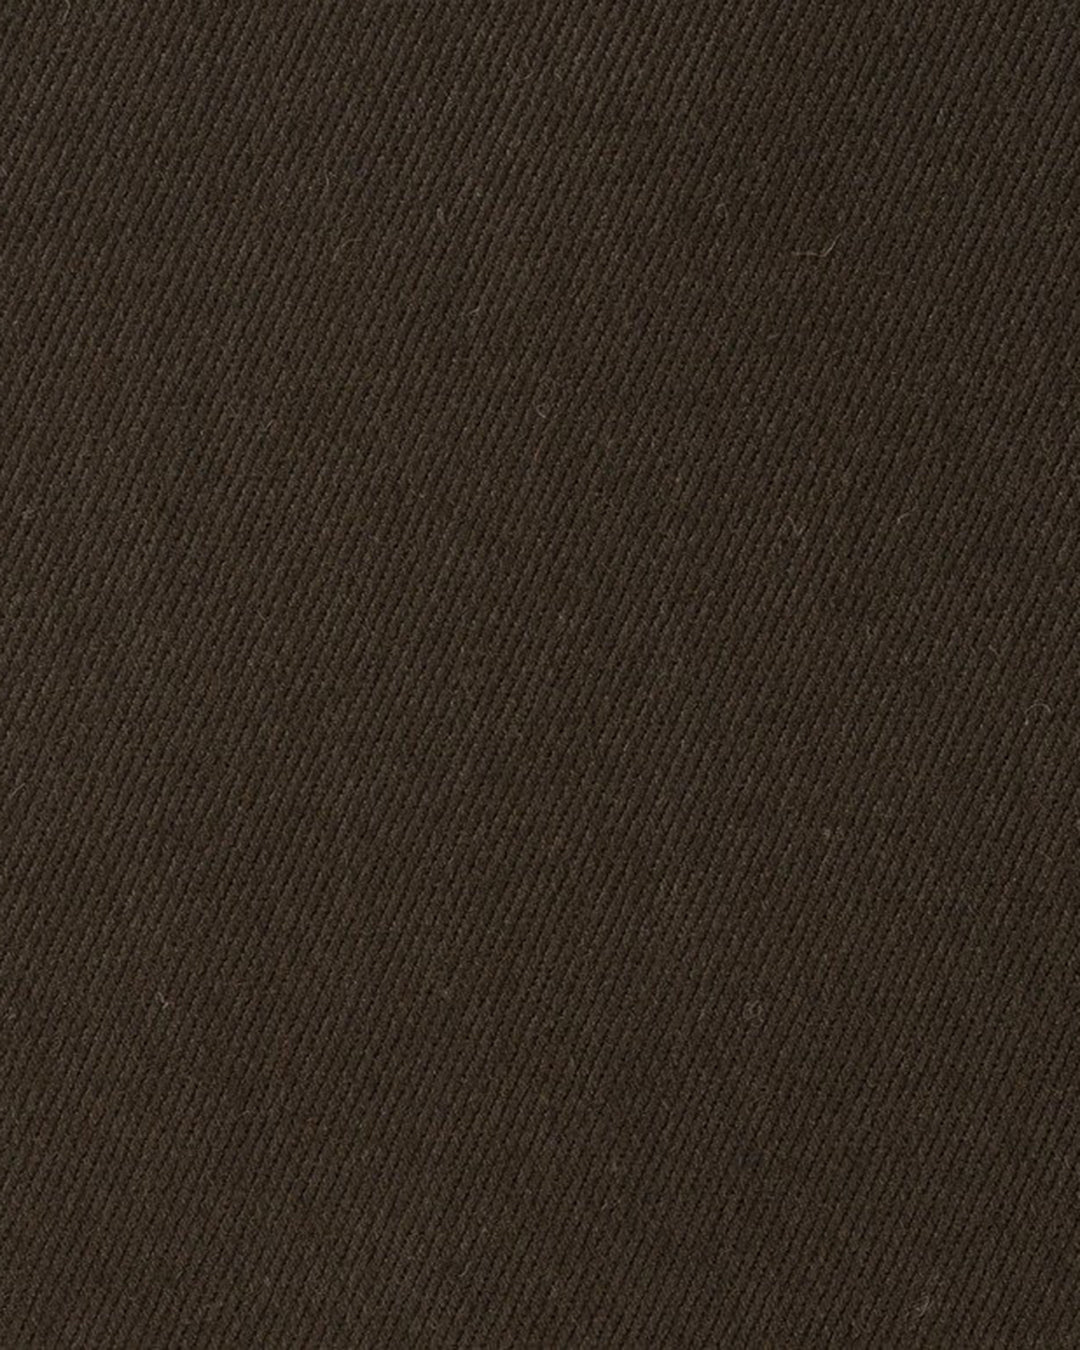 Dugdale Cotton:Chocolate Plain